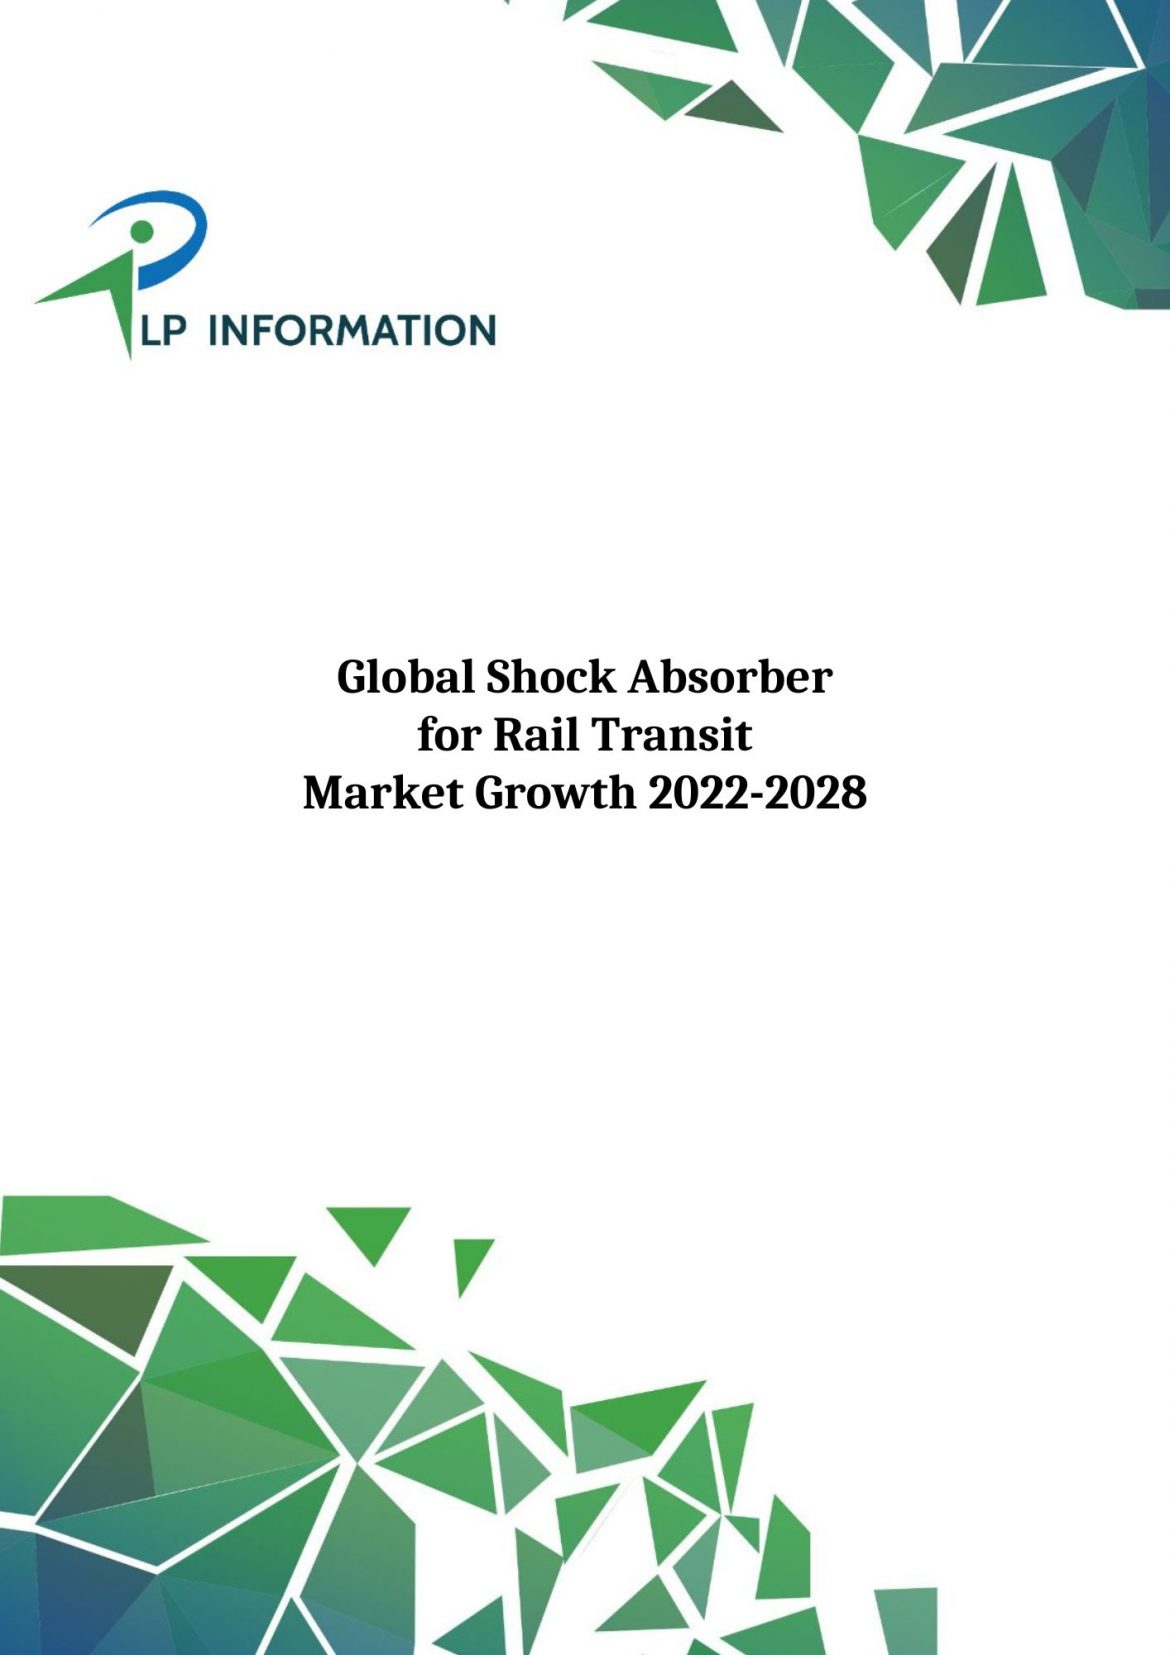 Global Shock Absorber for Rail Transit Market Growth 2022-2028